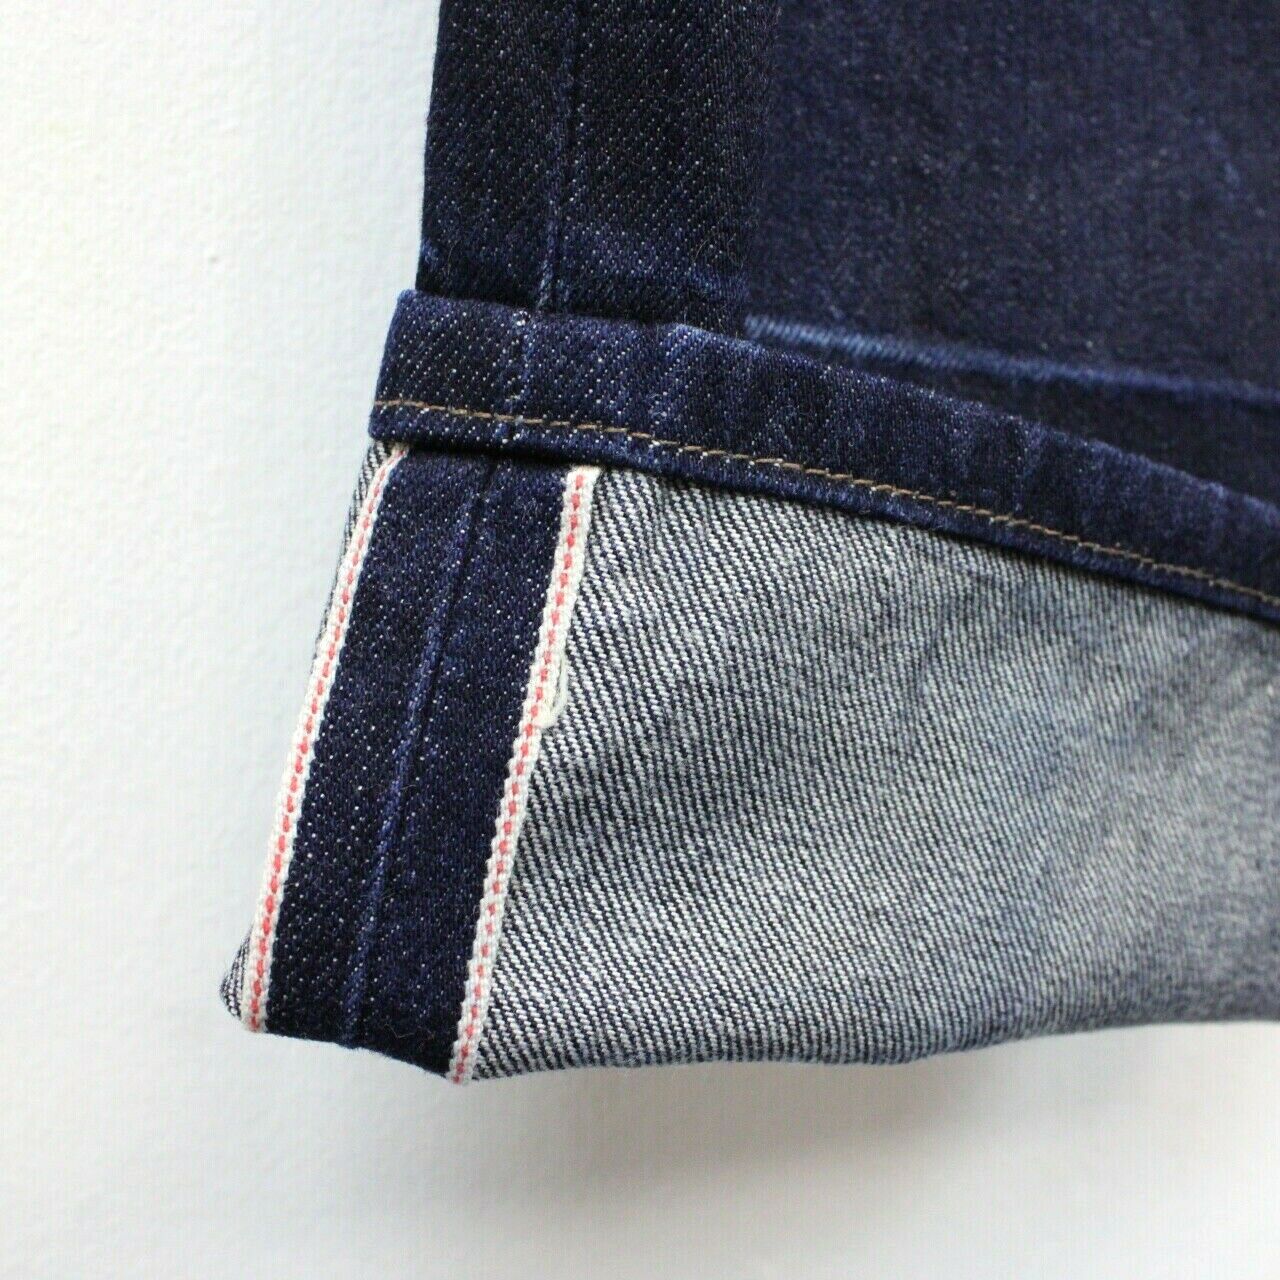 LEVIS 501 Selvedge Redline Jeans Indigo | W30 L38